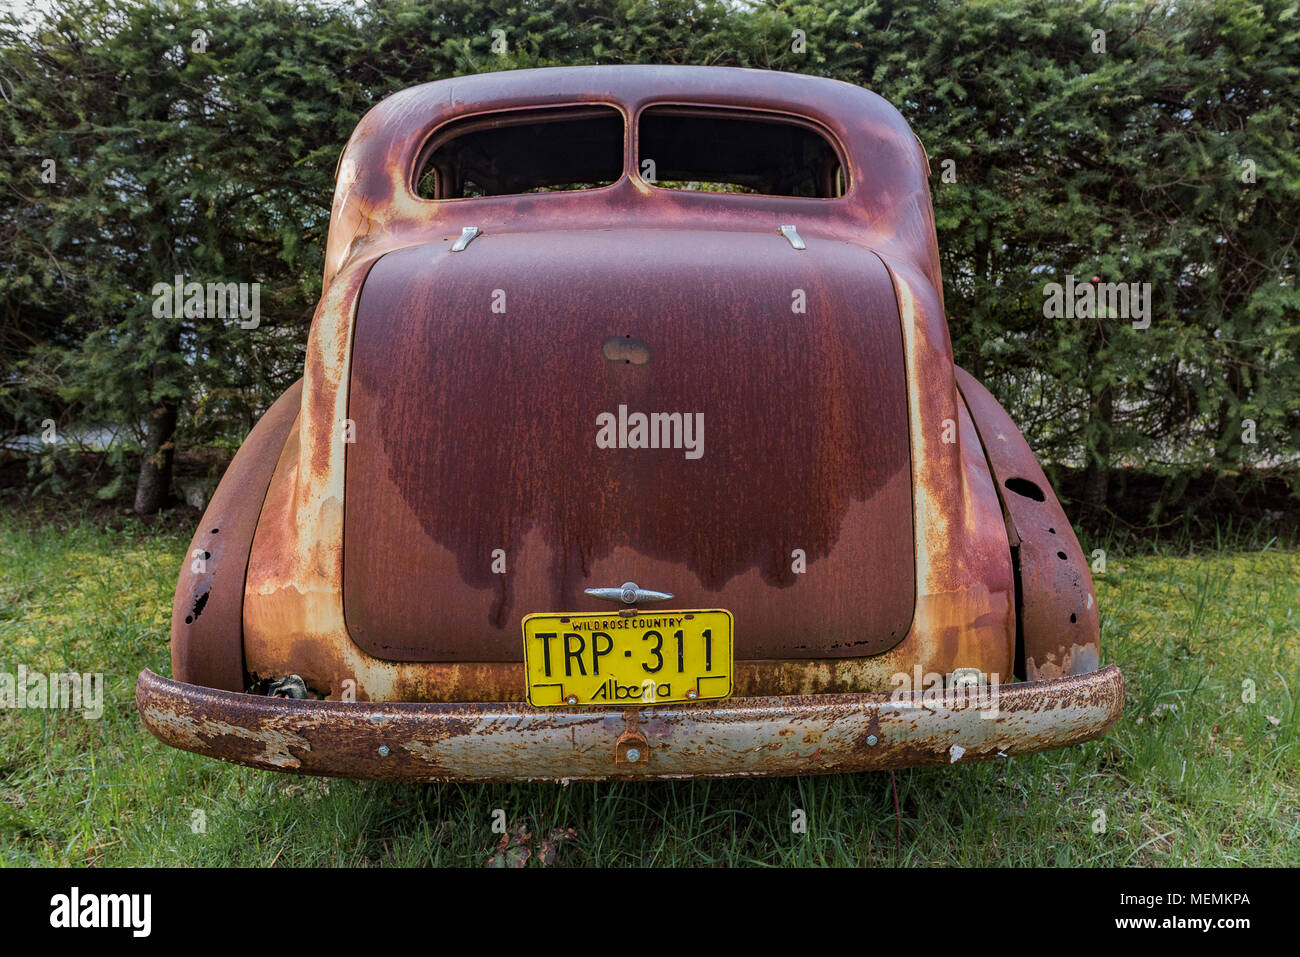 rusty old car Stock Photo